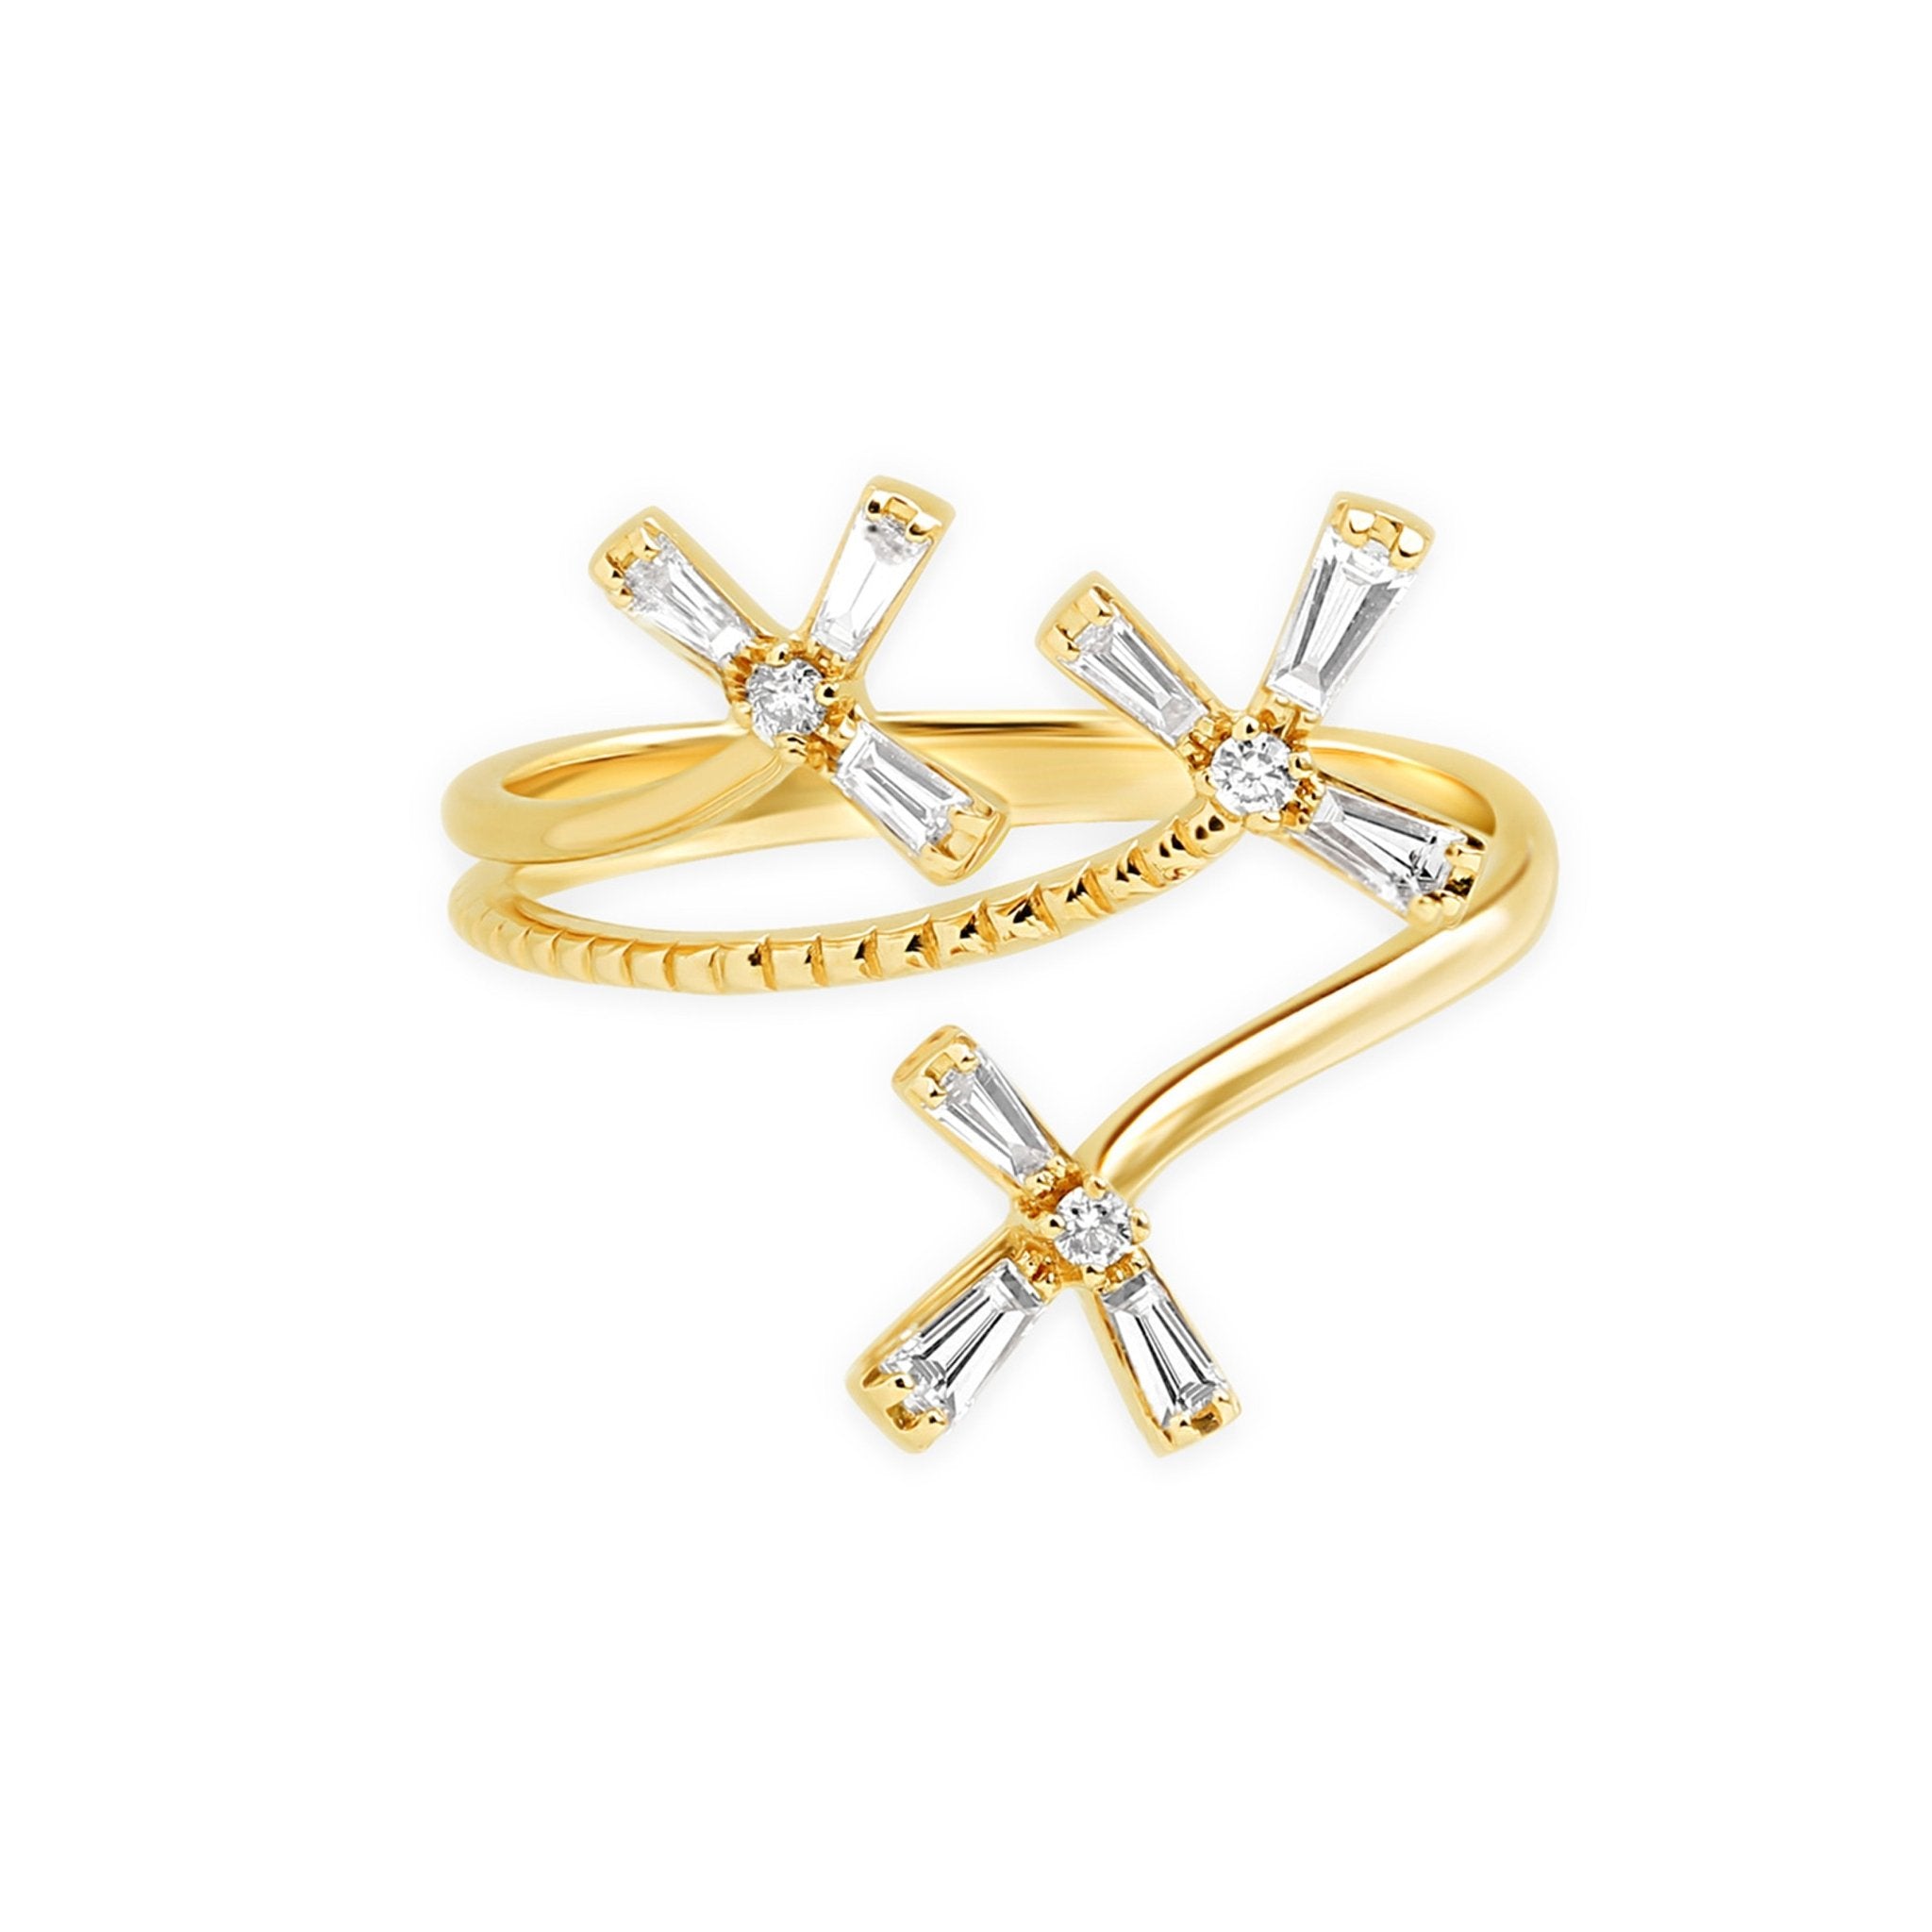 Diamond Three Flower Ring Rings Estella Collection #product_description# 17515 14k Cocktail Ring Diamond #tag4# #tag5# #tag6# #tag7# #tag8# #tag9# #tag10# 6